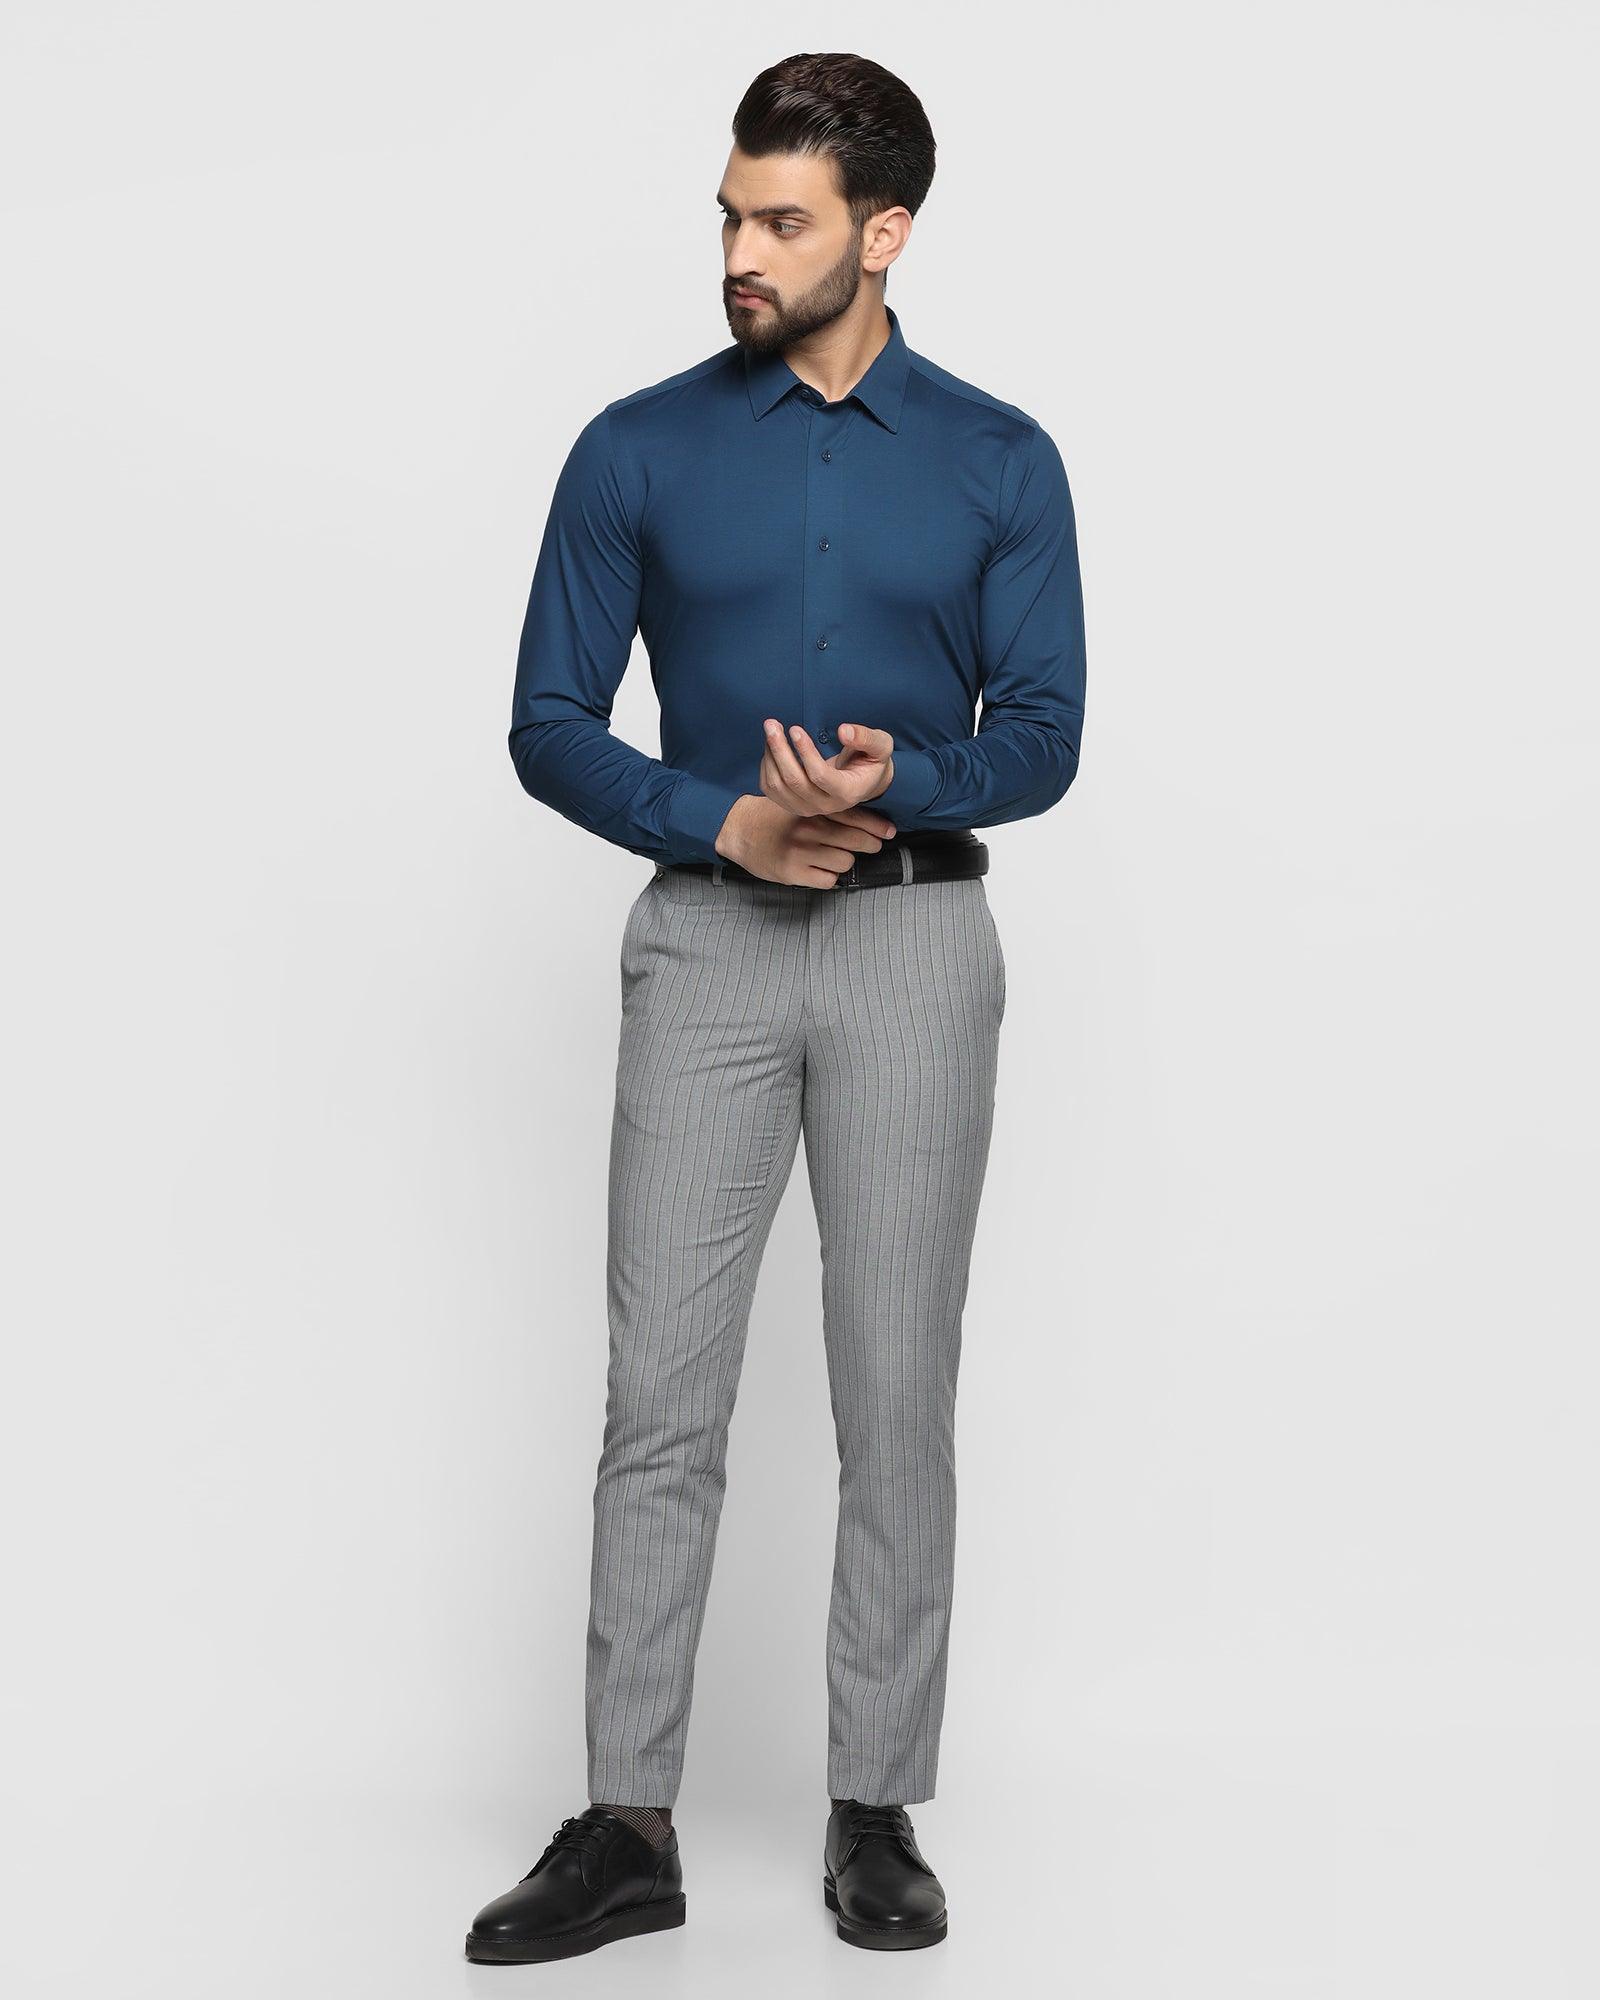 Semi Formal Attire For Men - Semi Formal Dressing Style For Men | Formal  attire for men, Men fashion casual shirts, Formal men outfit